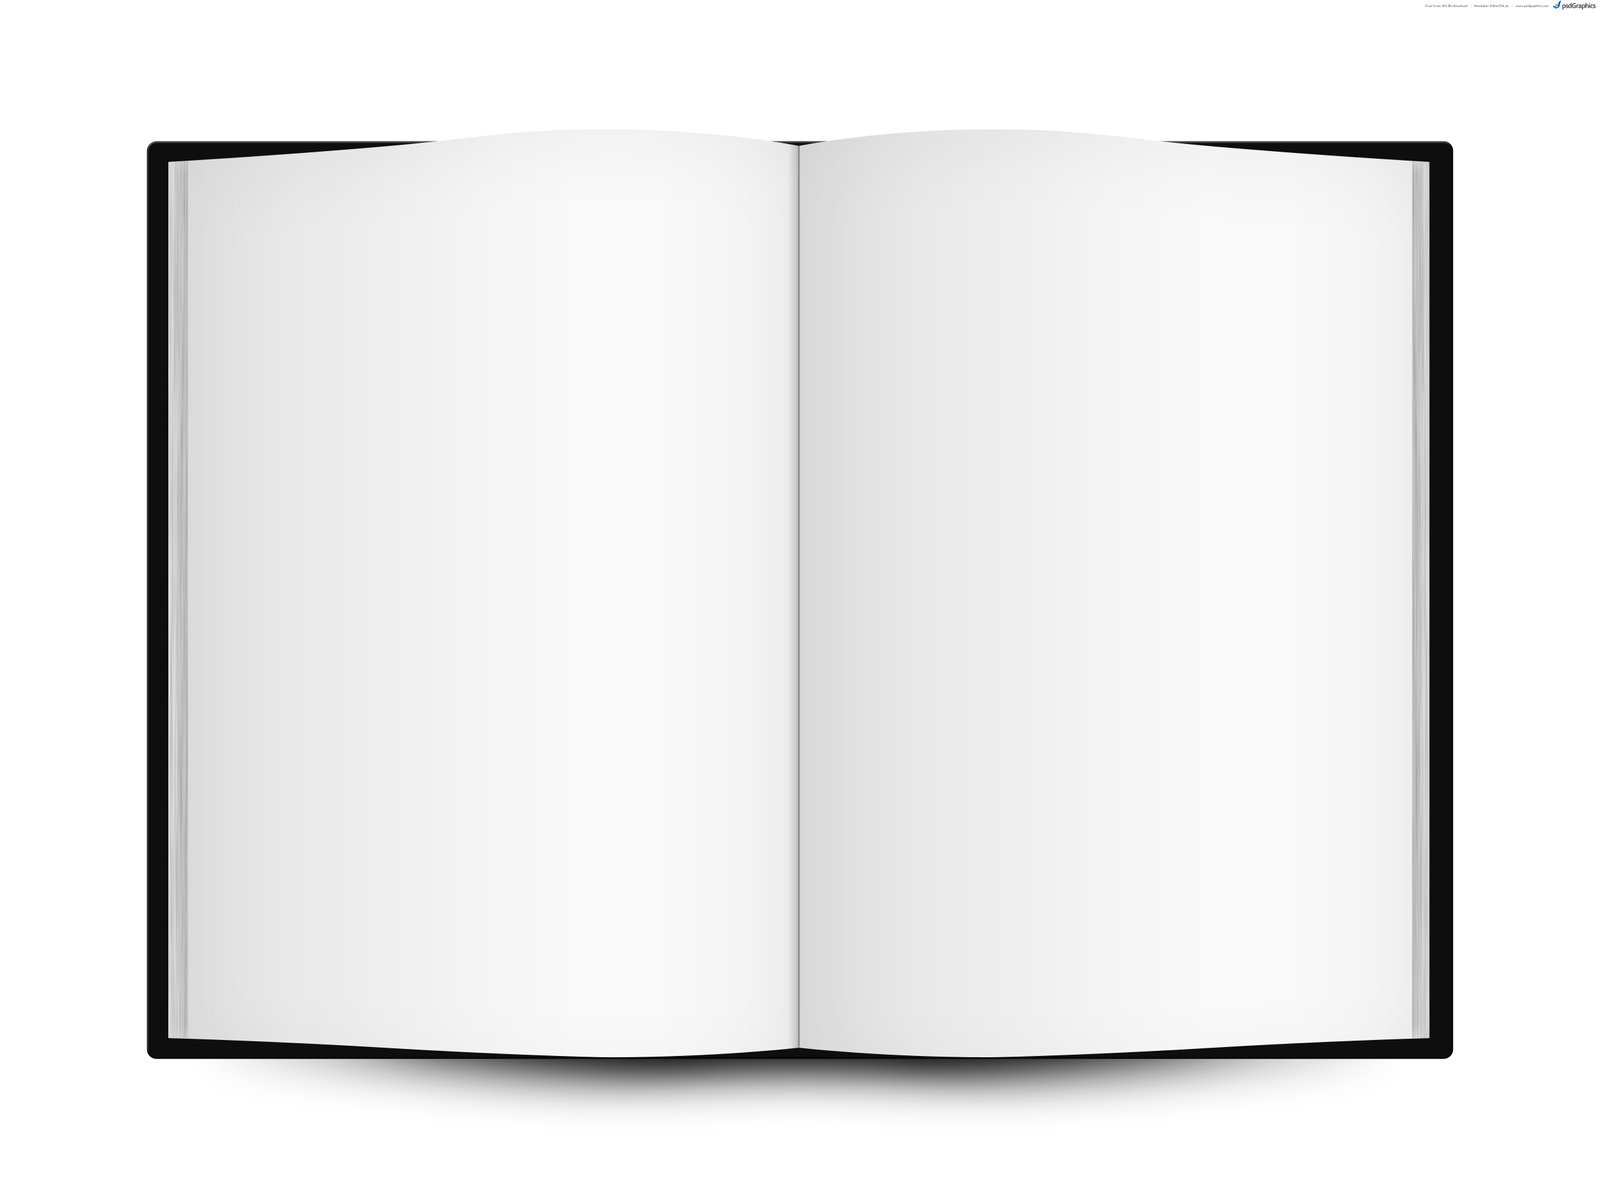 Blank open book template